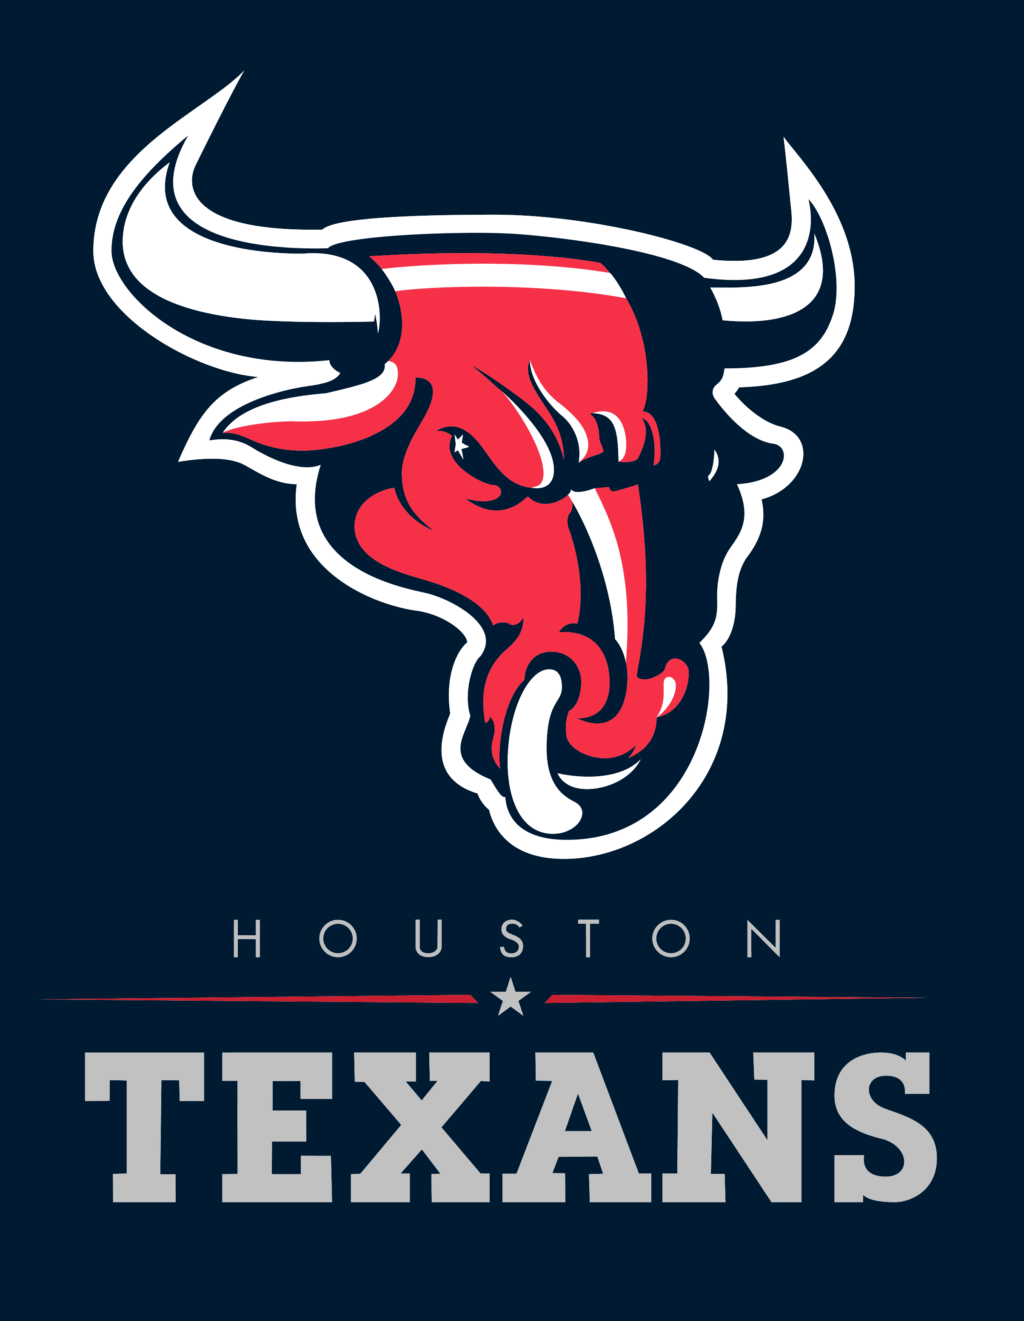 NFL Logo Houston Texans, Houston Texans SVG, Vector Houston Texans Clipart Houston Texans American Football Kit Houston Texans, SVG, DXF, PNG, American Football Logo Vector Houston Texans EPS download NFL-files for silhouette, Houston Texans files for clipping.